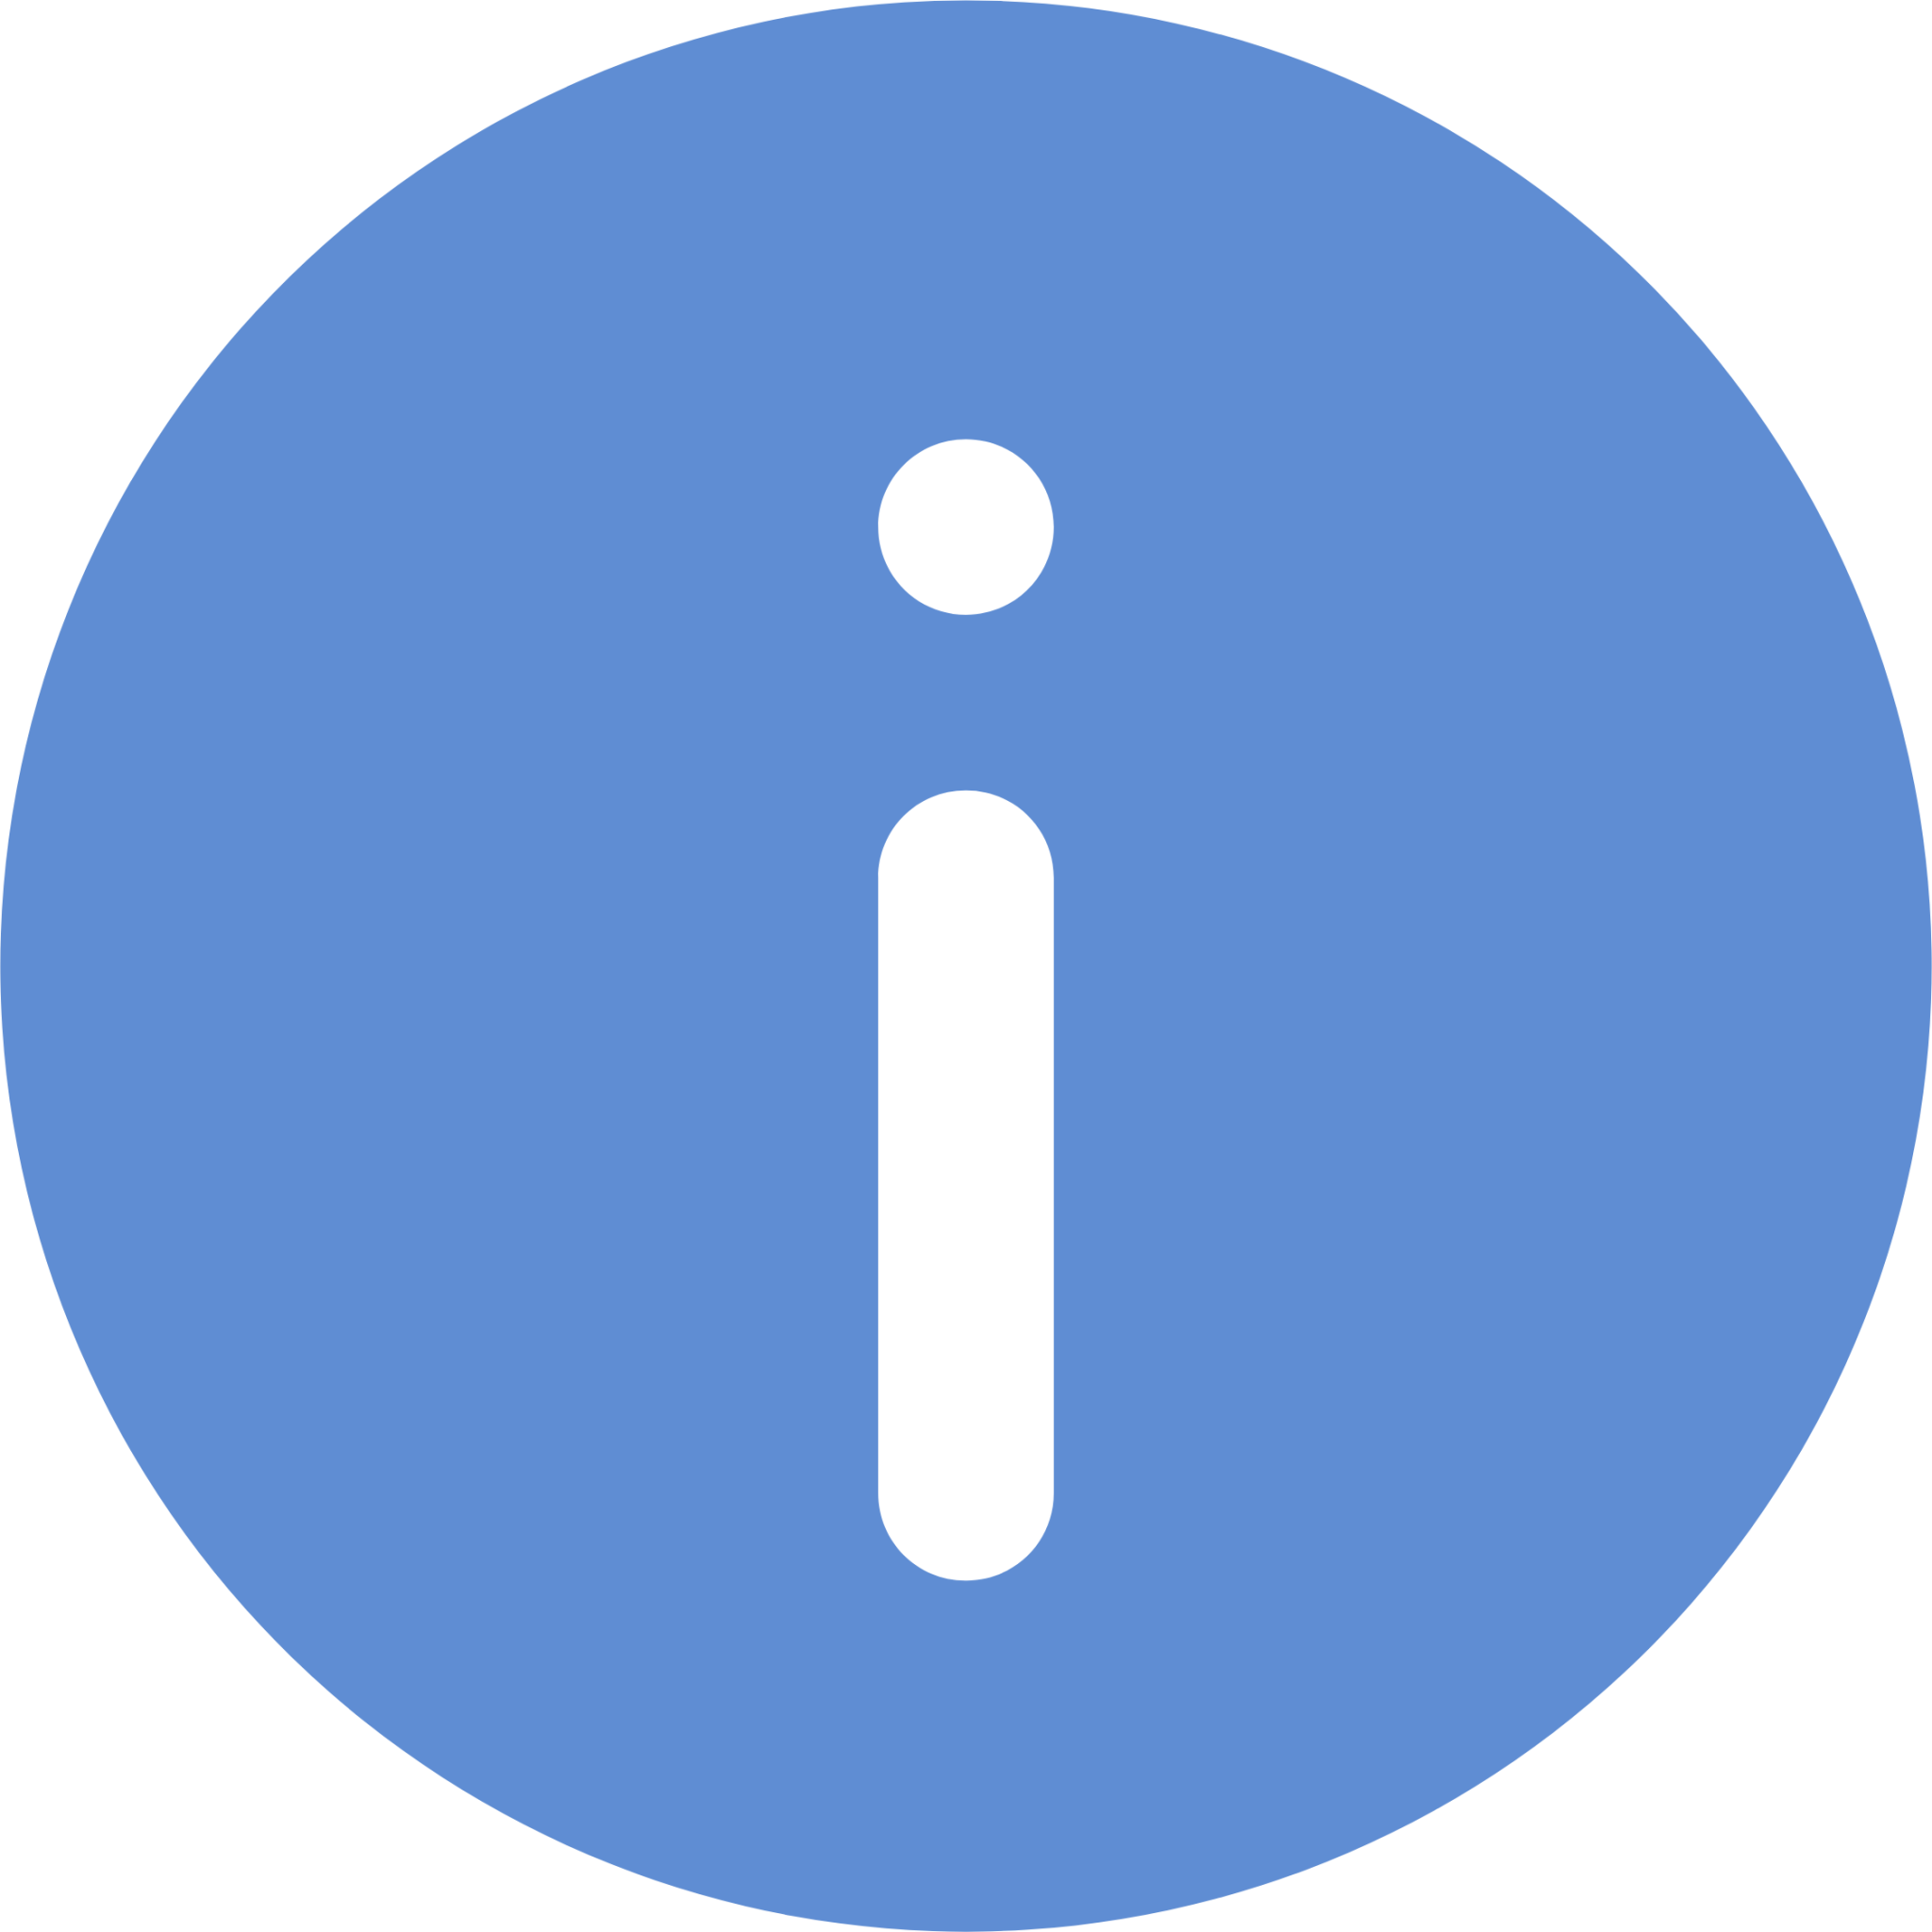 emblem information icon